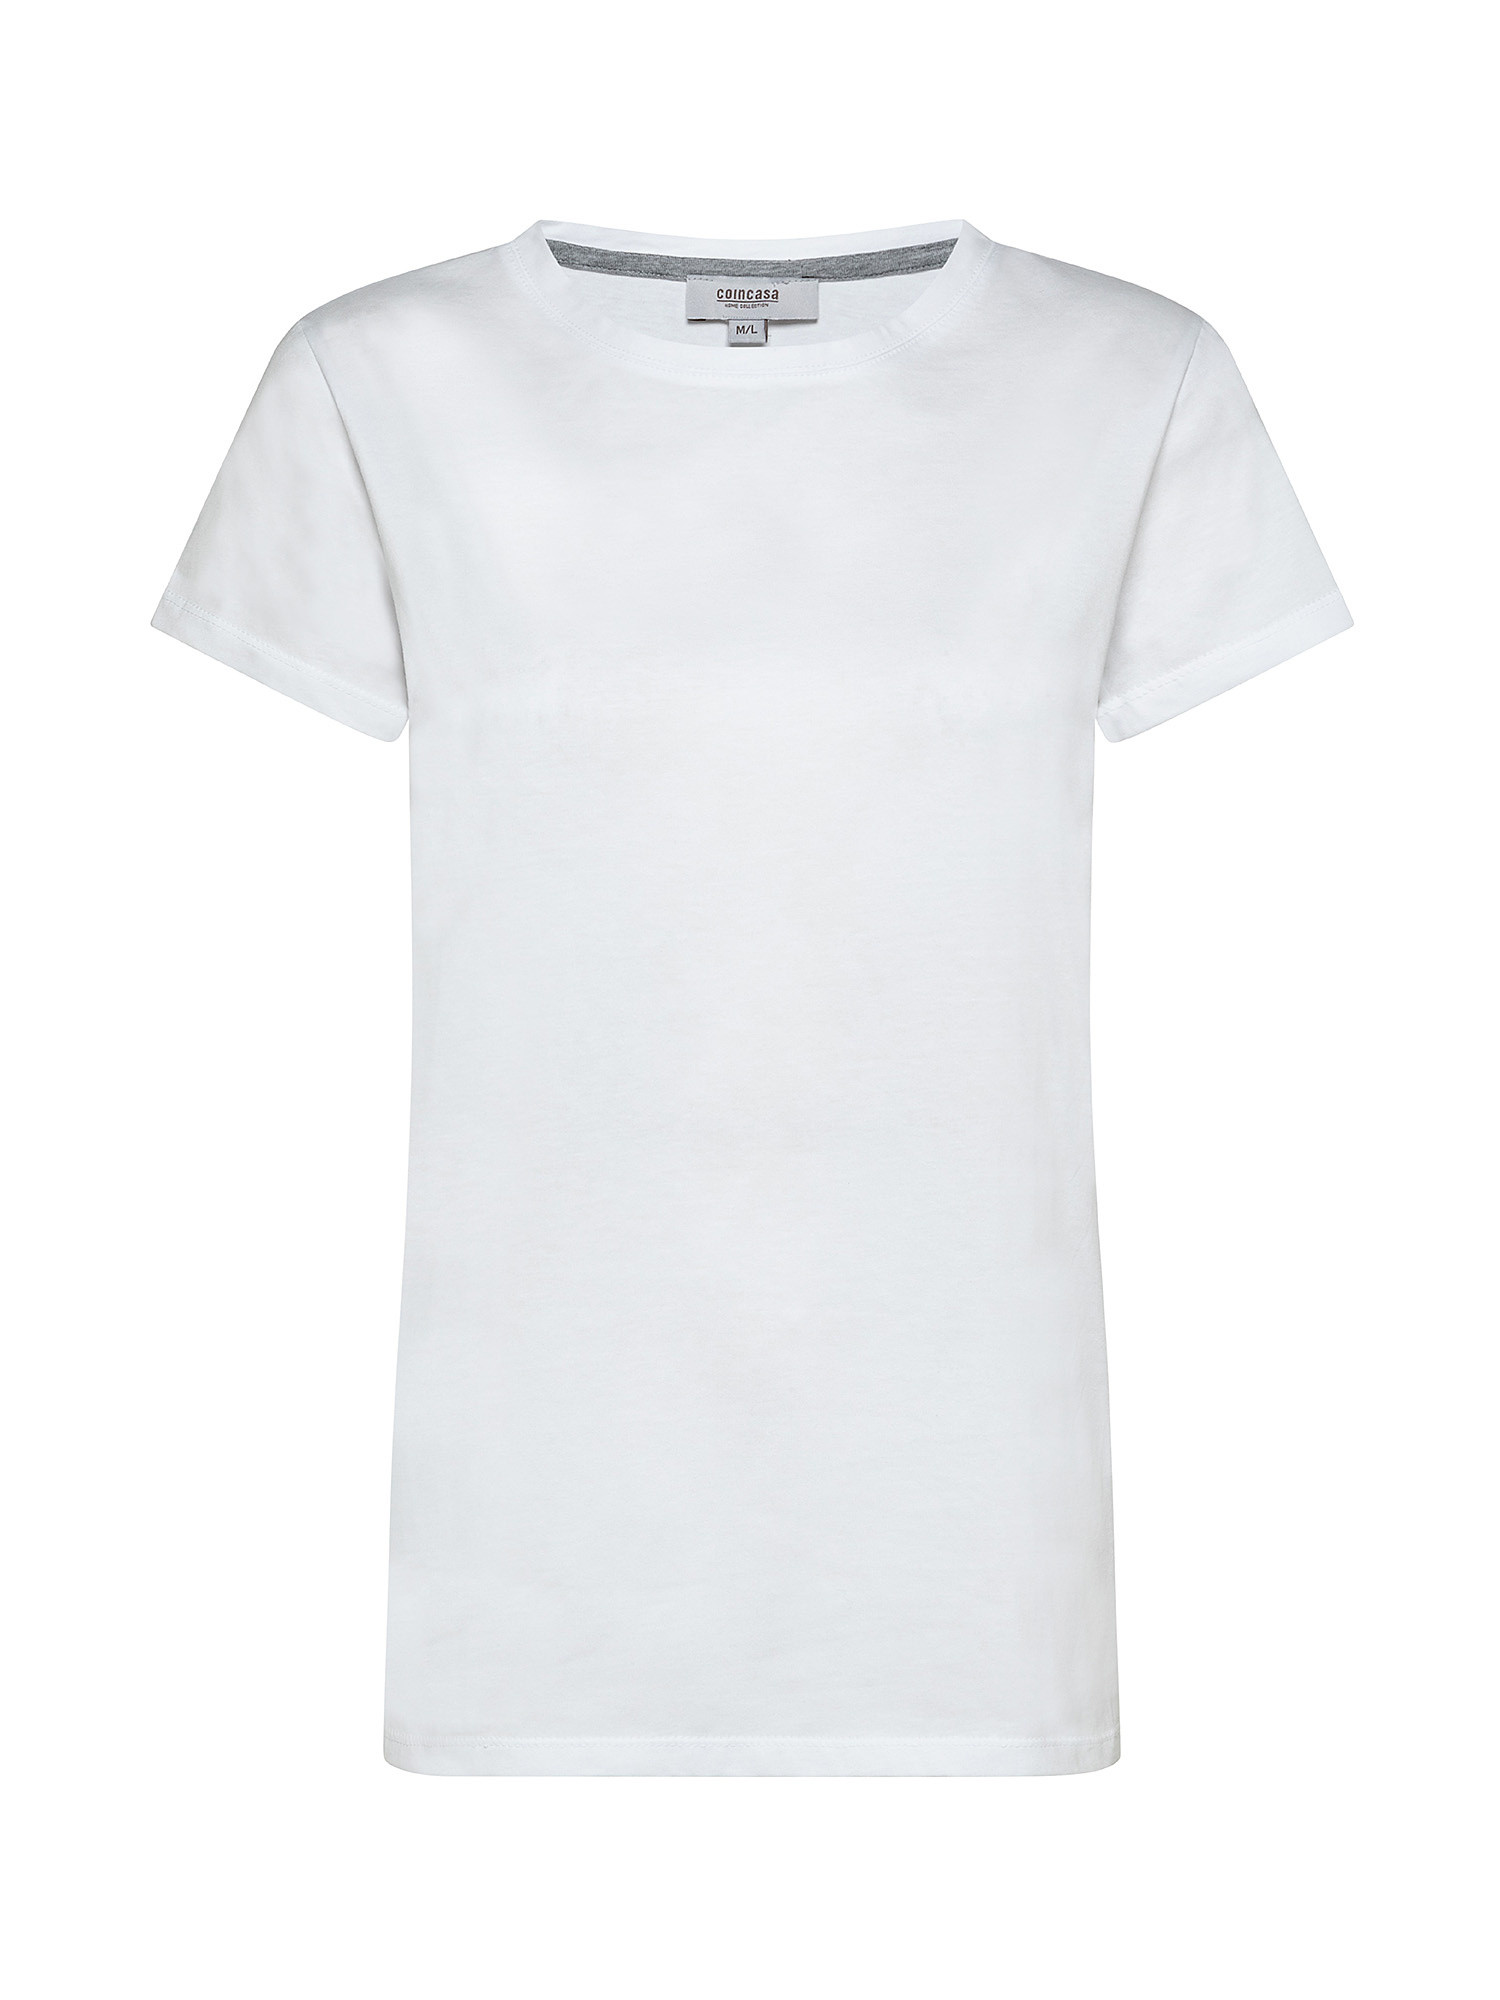 T-shirt basic puro cotone tinta unita, Bianco, large image number 0